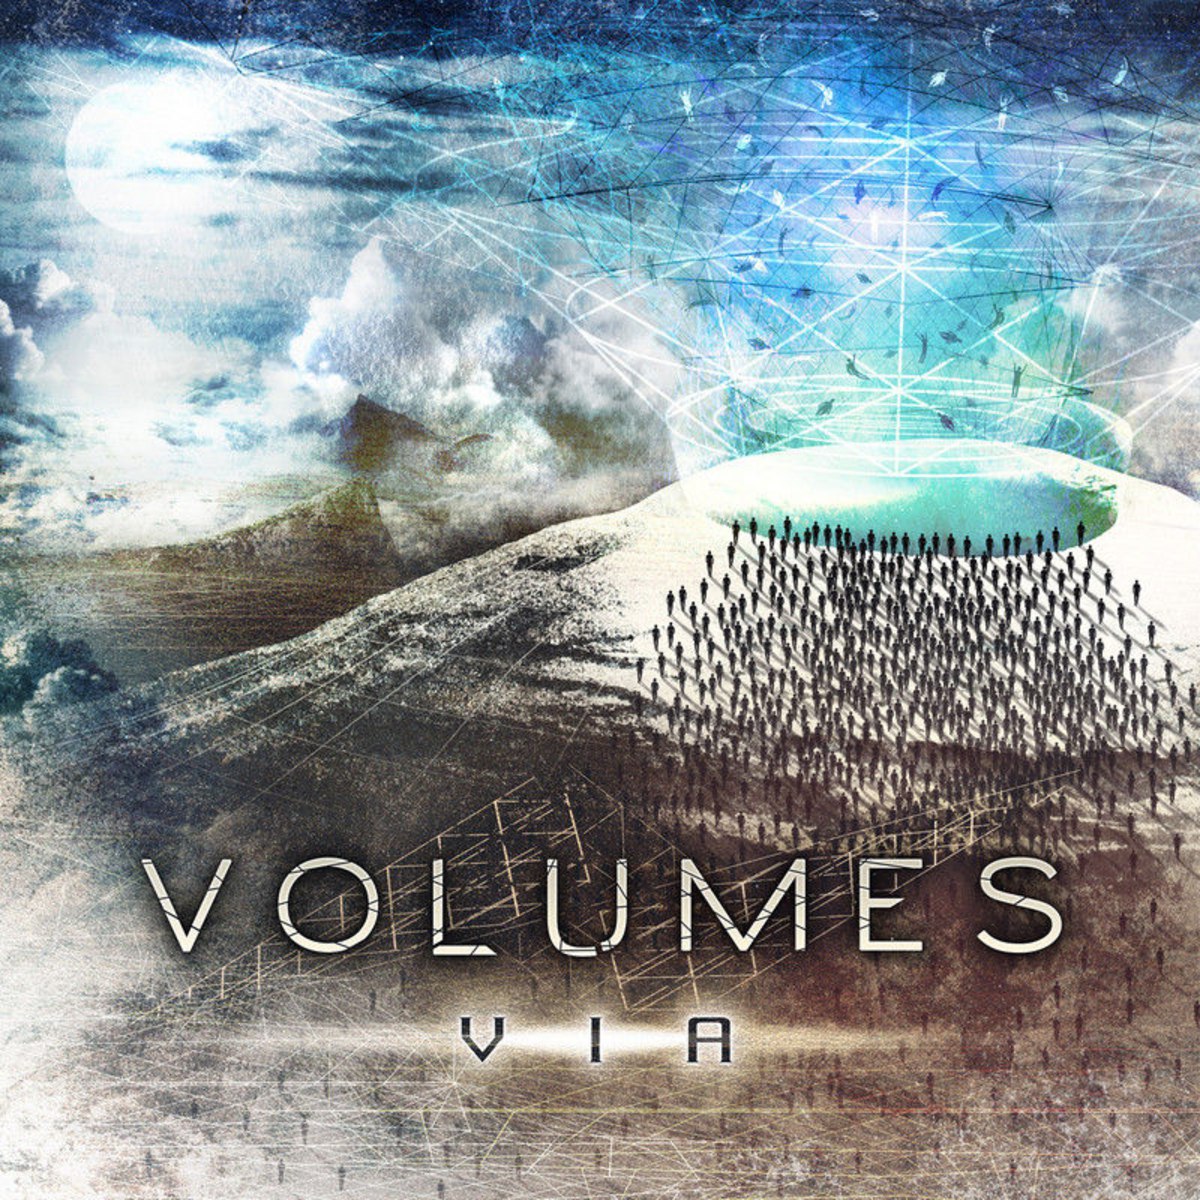 Volumes - Via (2011)